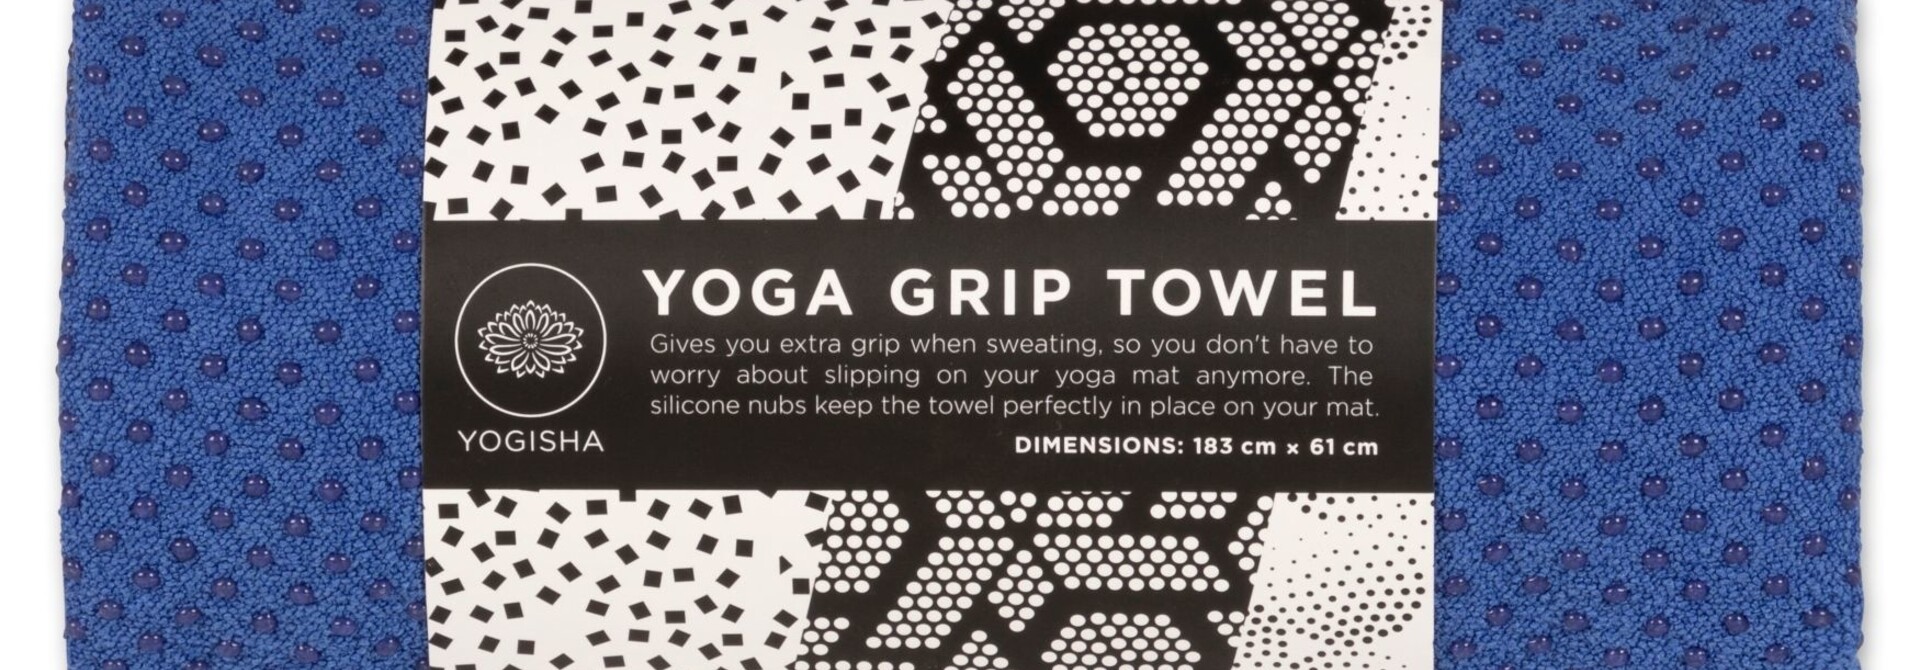 Yogisha Yoga Handdoek 1 + 1 gratis!